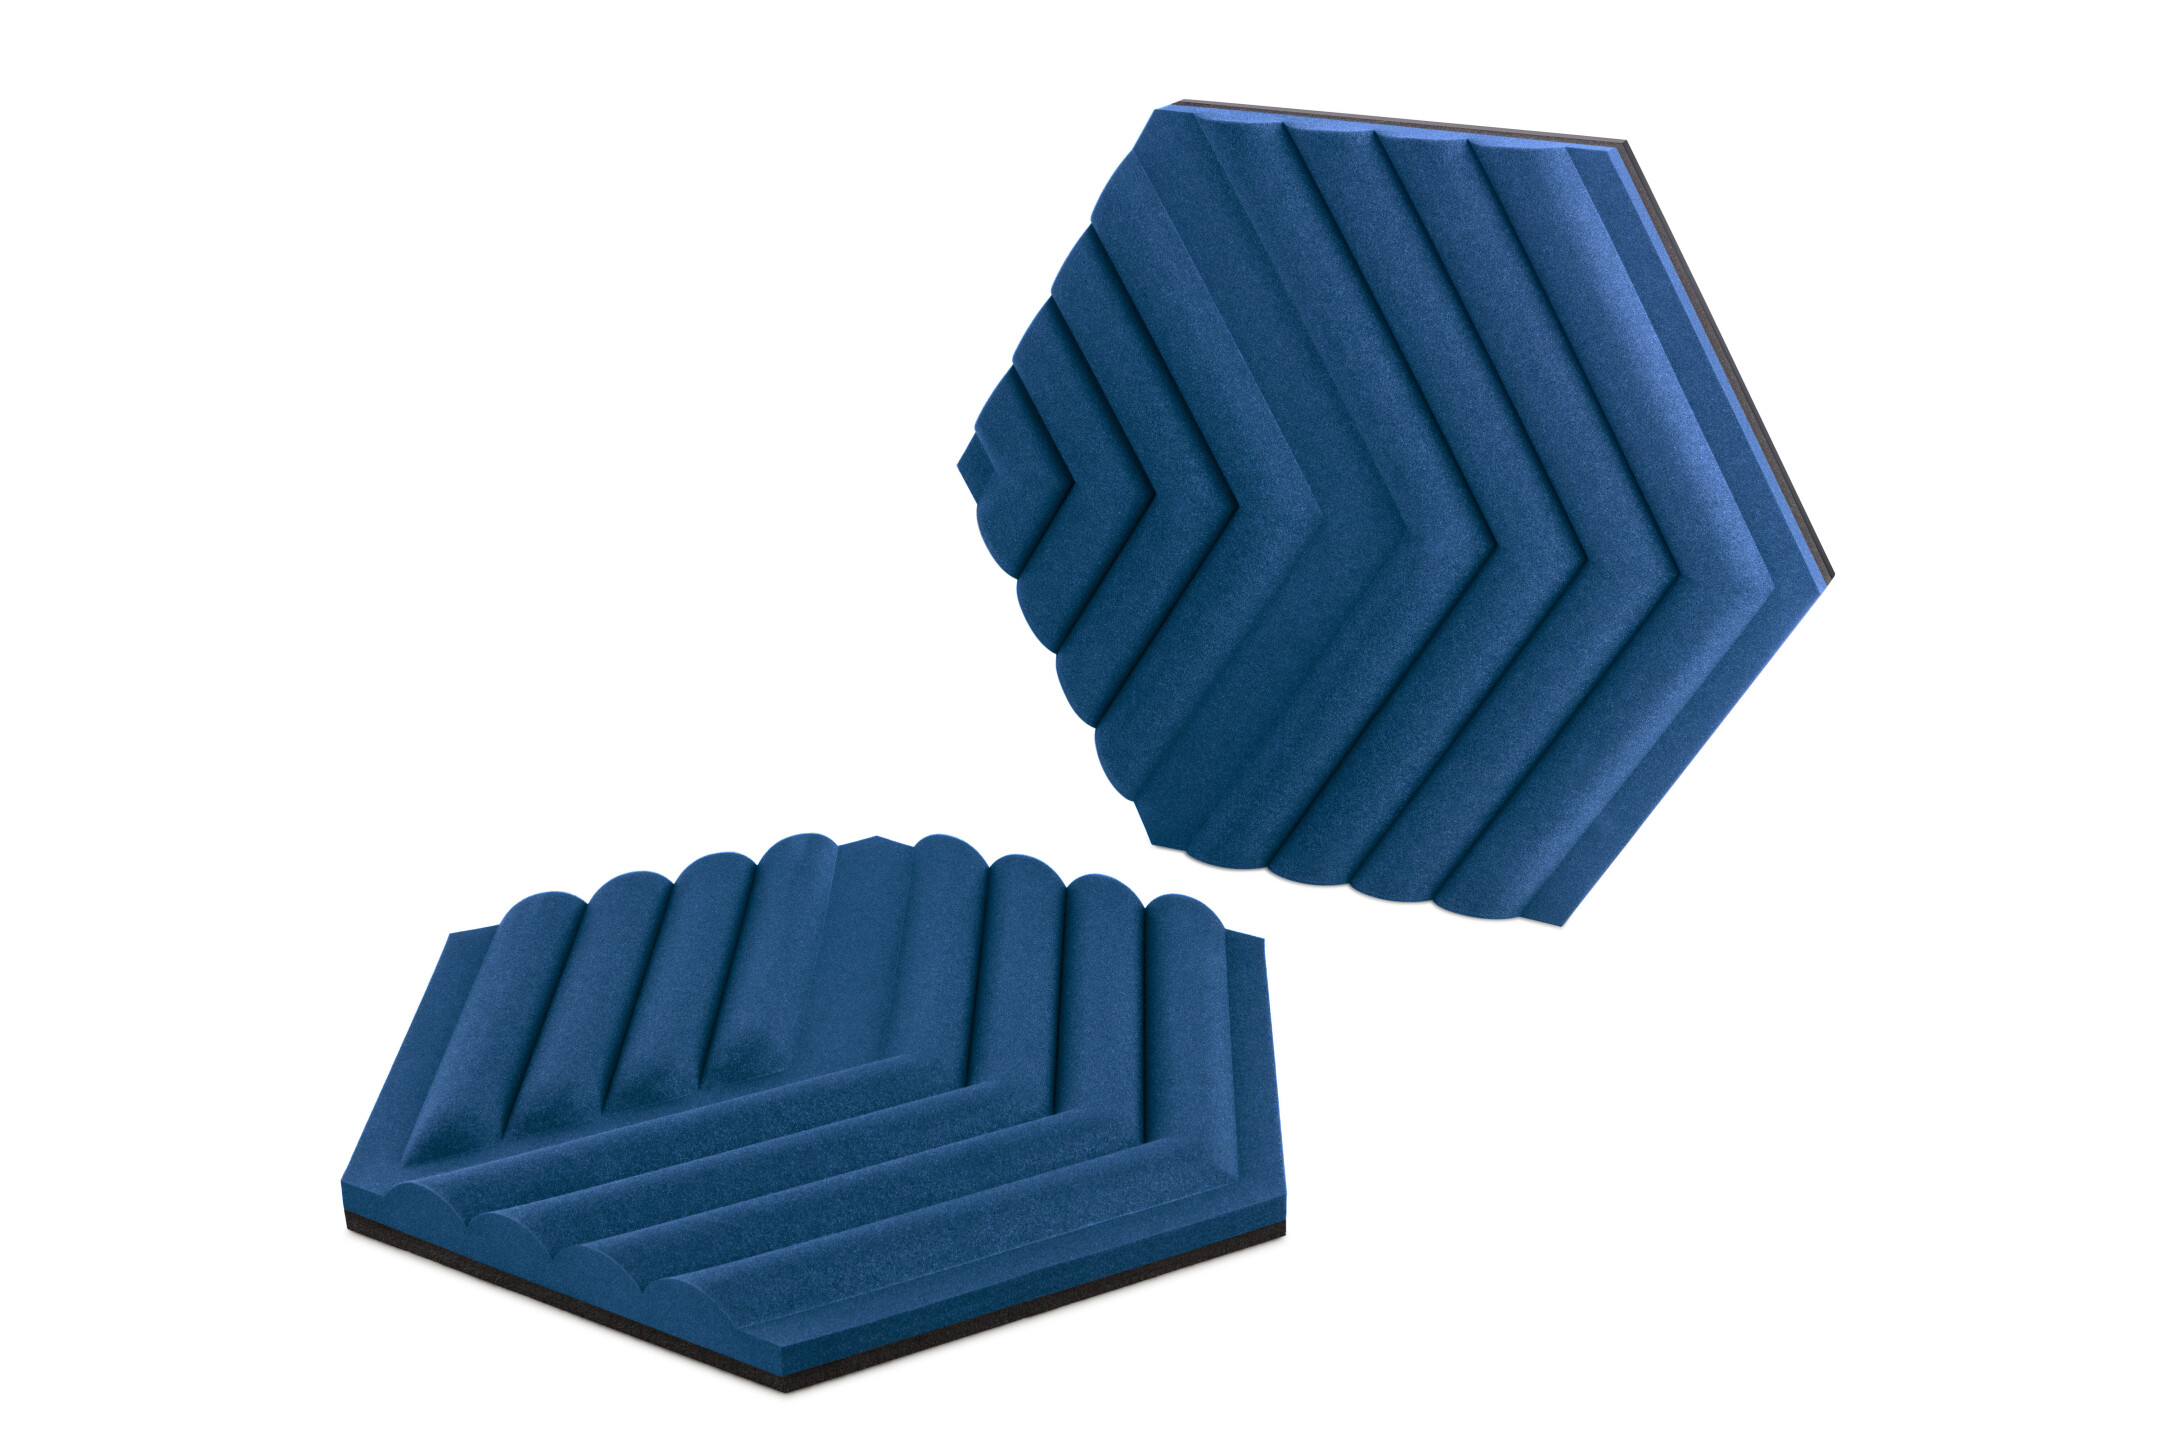 Elgato-Wave-Panels-Starter-Kit-blau-Akustikschaumplatten